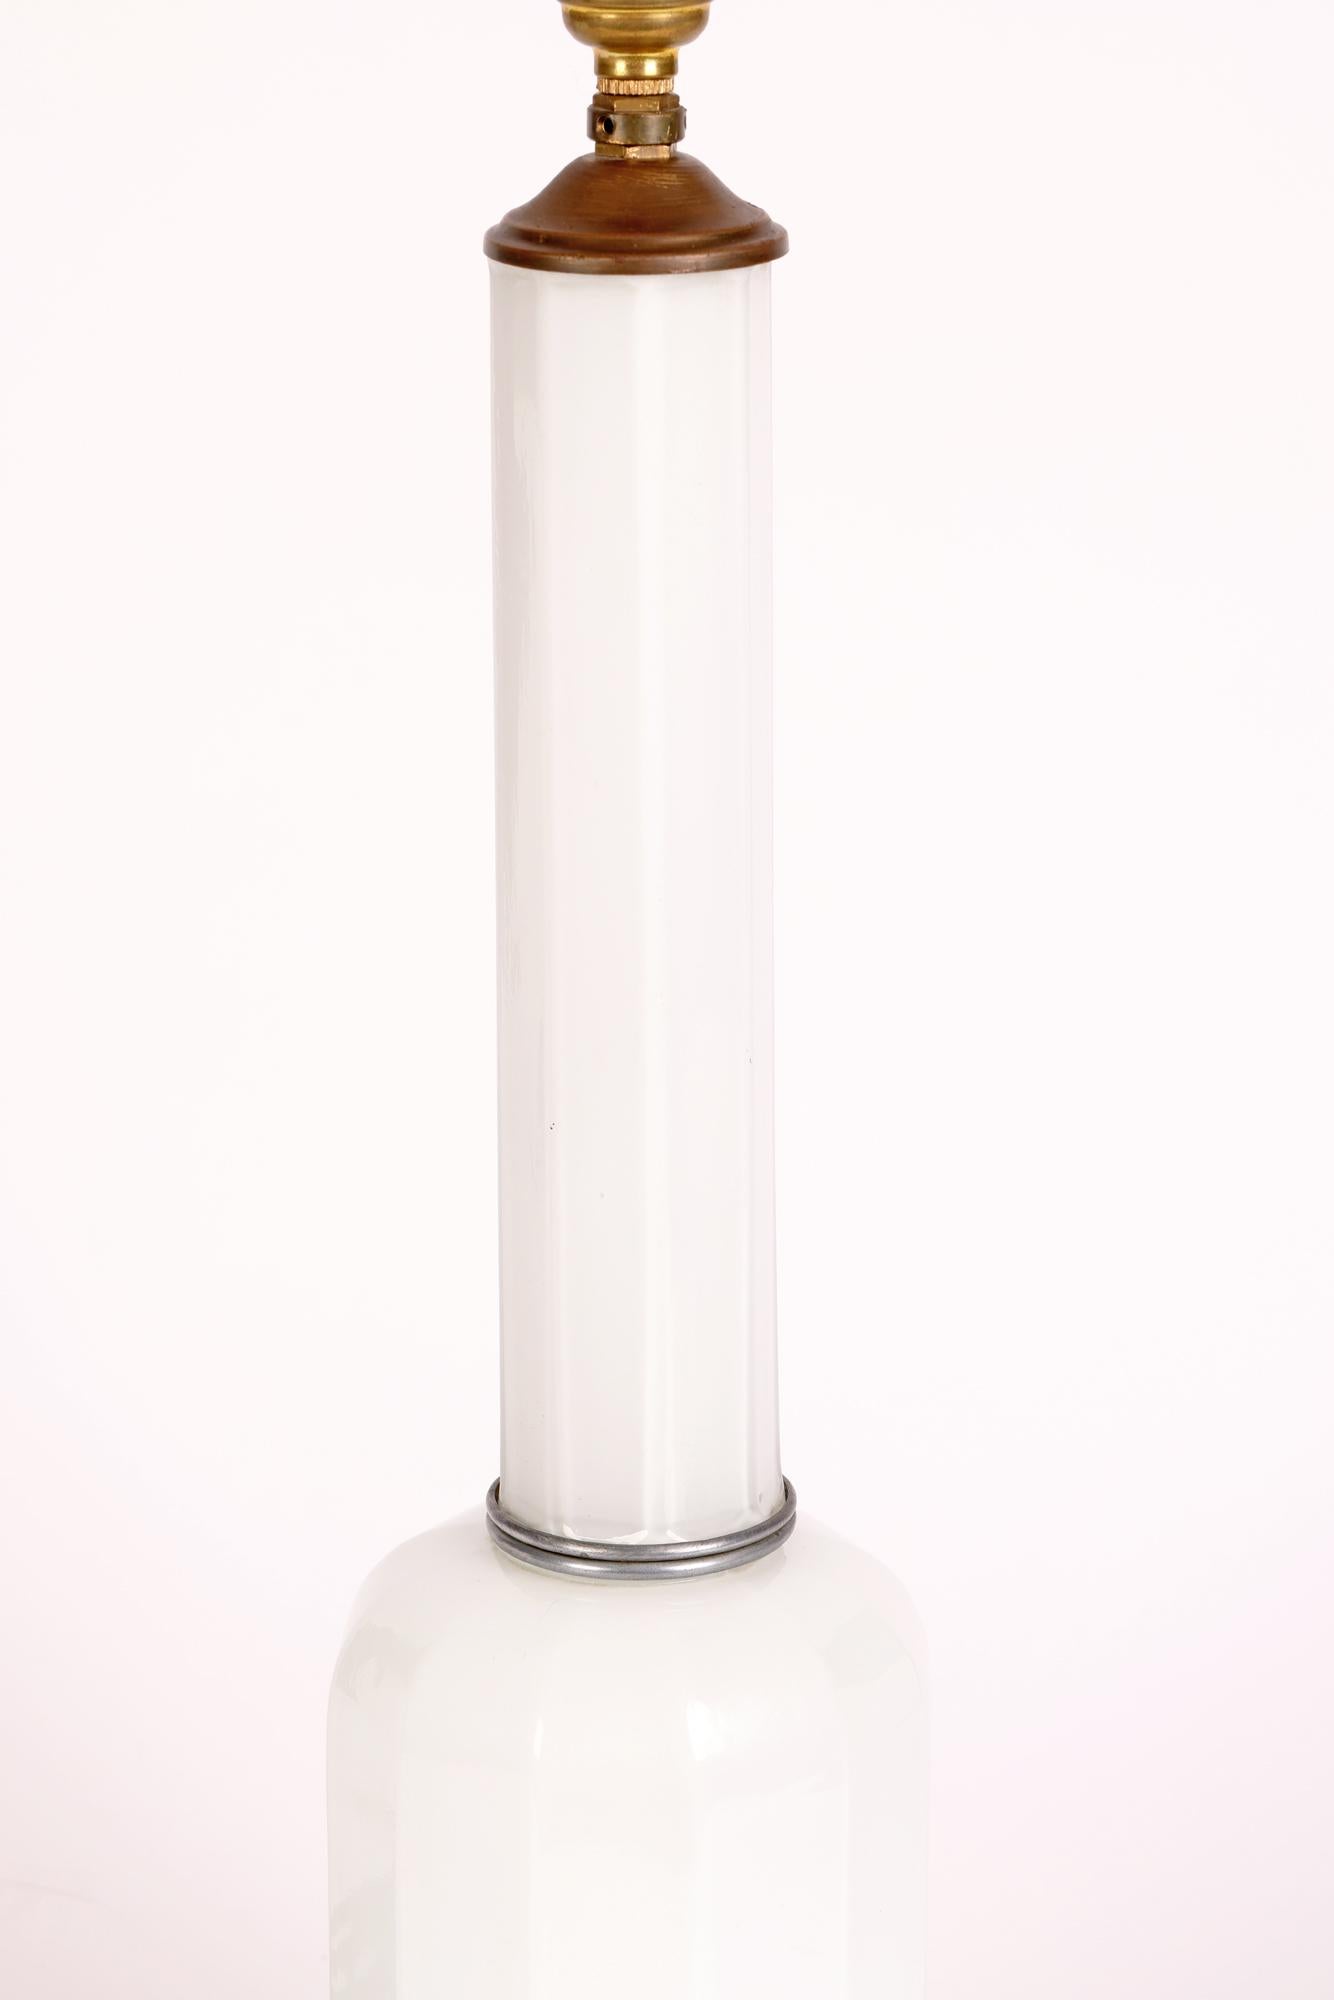 Brass Art Deco White Cased Glass Column Form Lamp Base For Sale